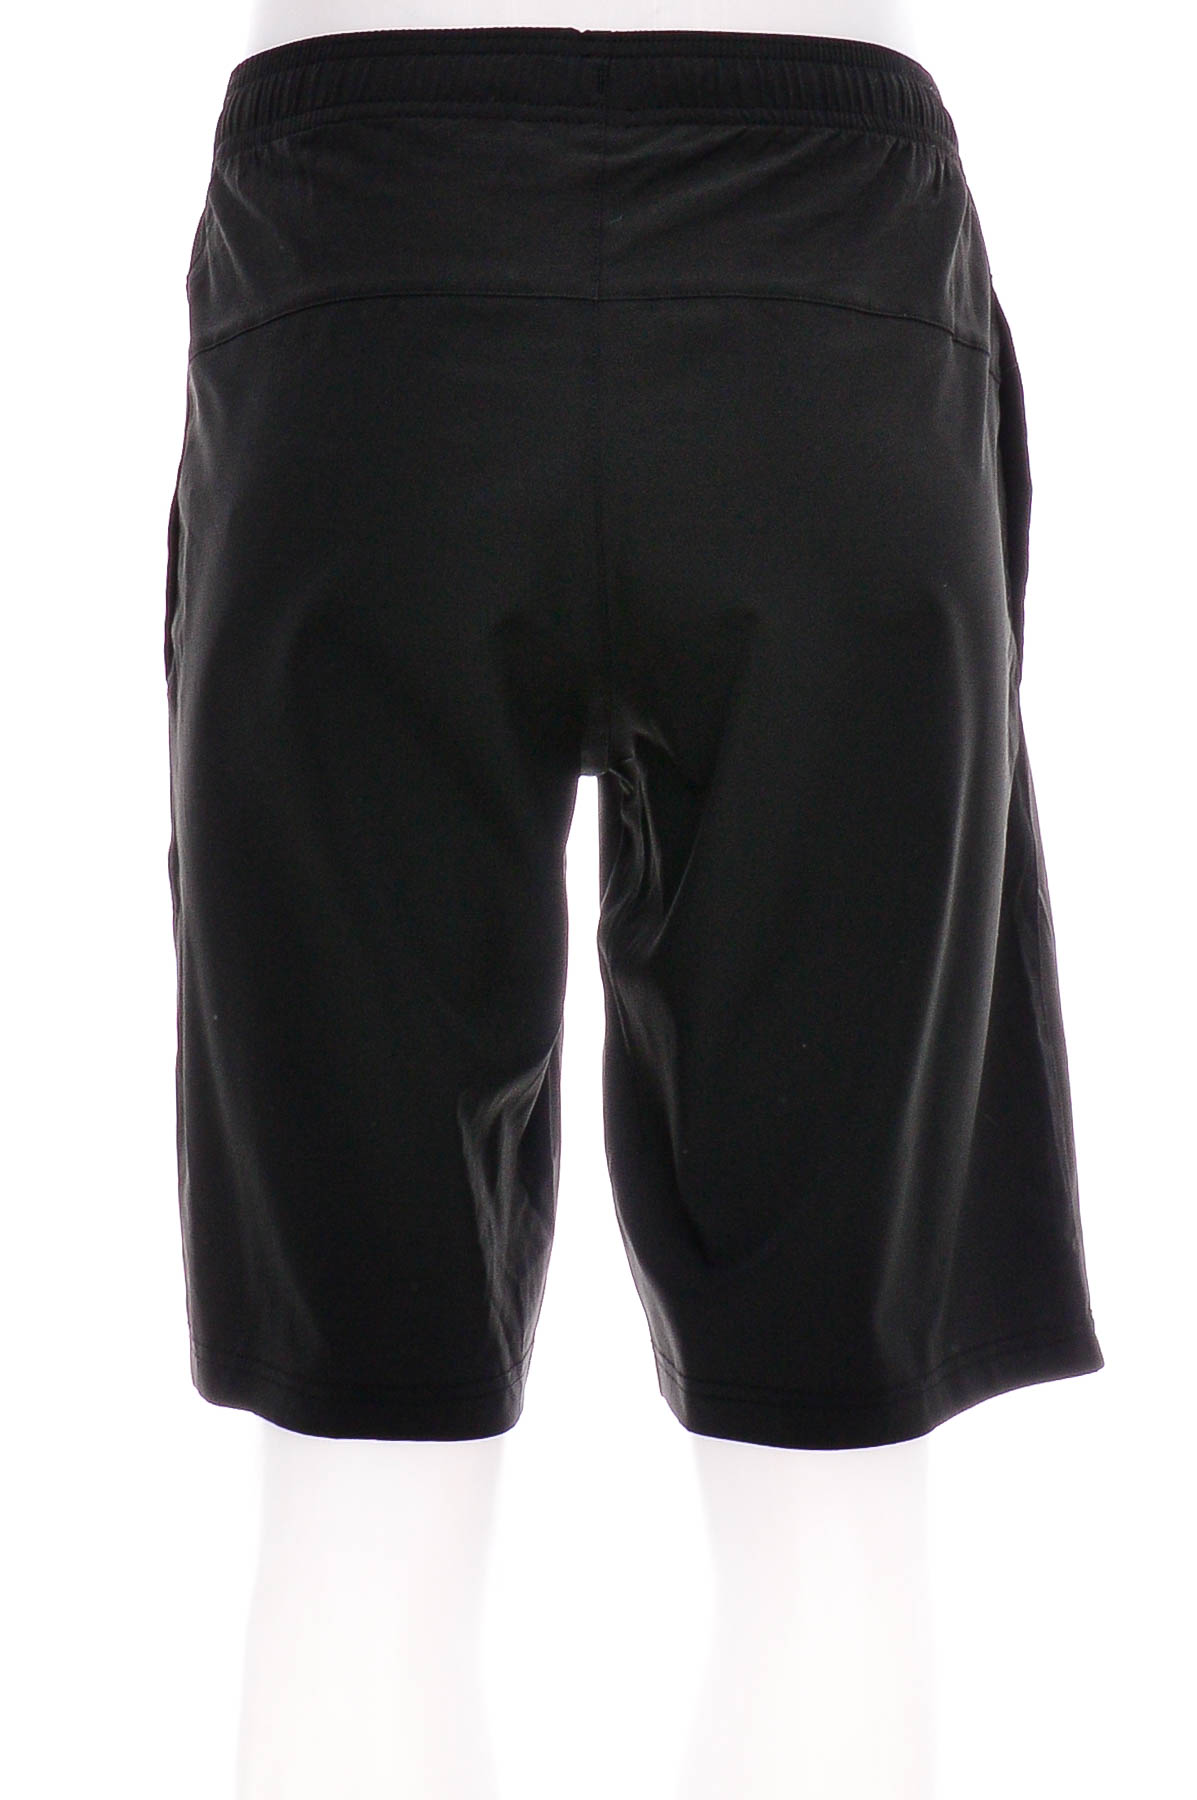 Men's shorts - 1